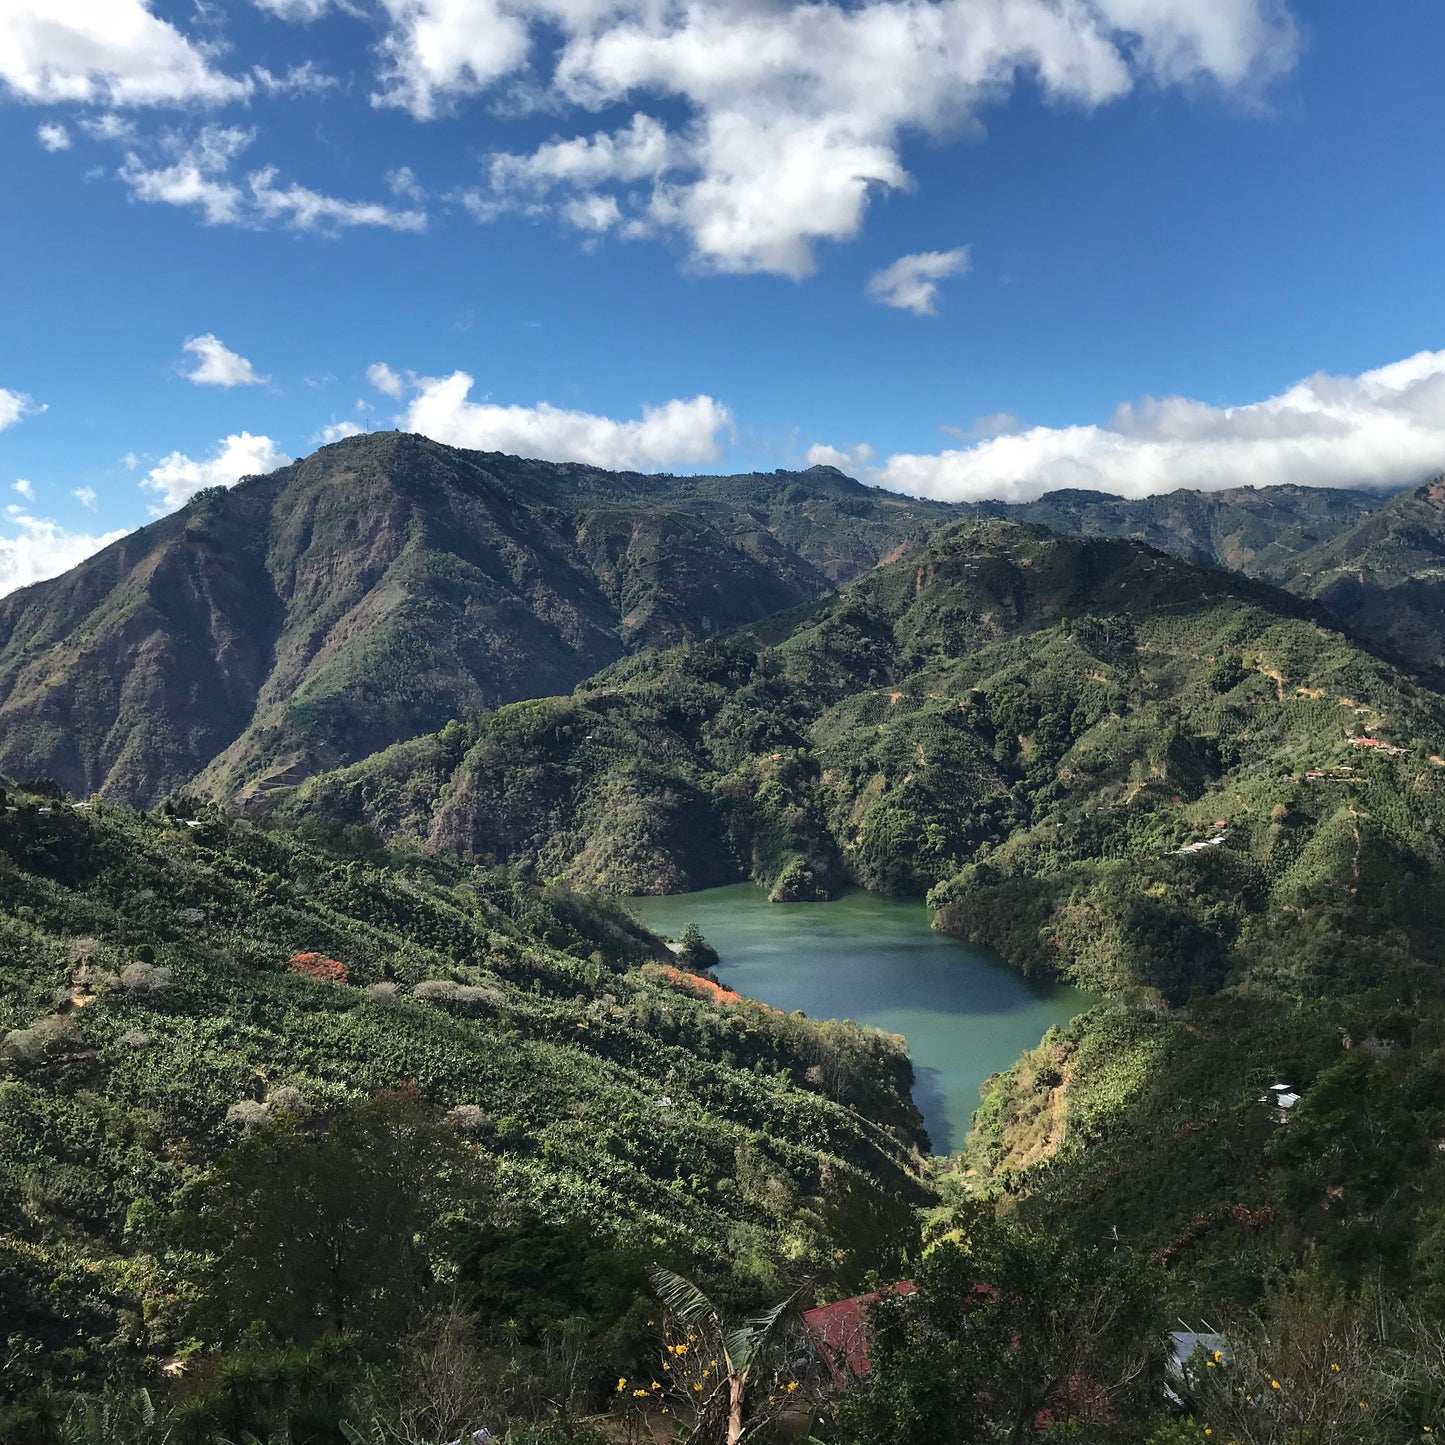 The landscape around Volcan Azul